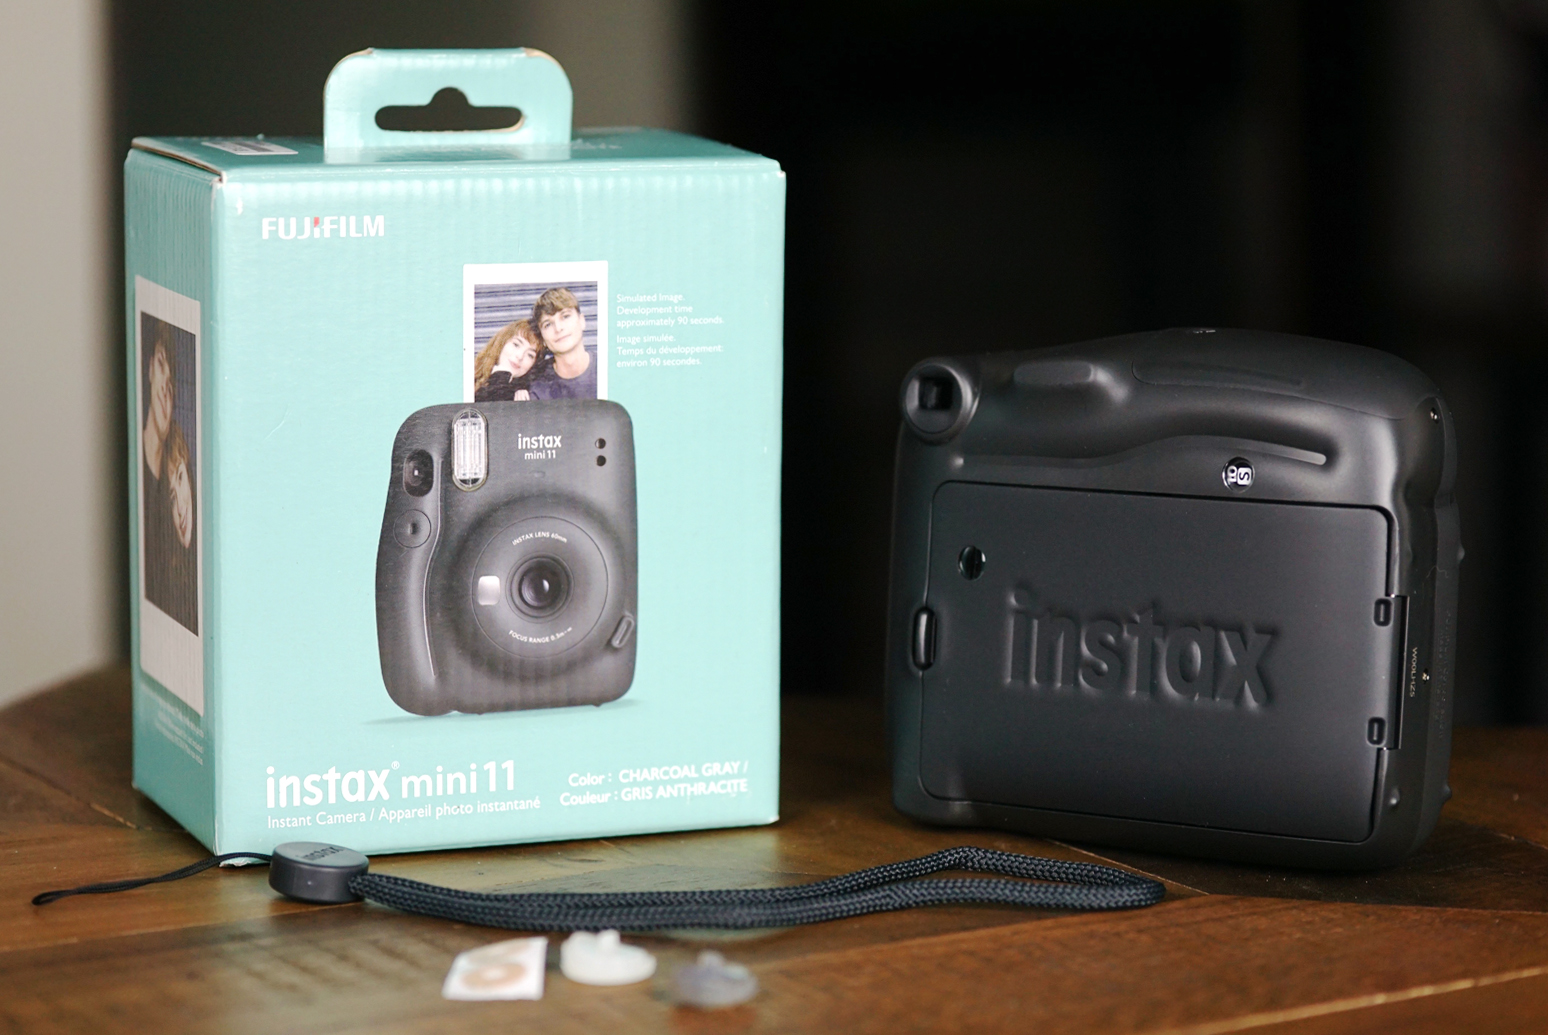 Camara Instantánea Fujifilm Instax Mini 11 gris